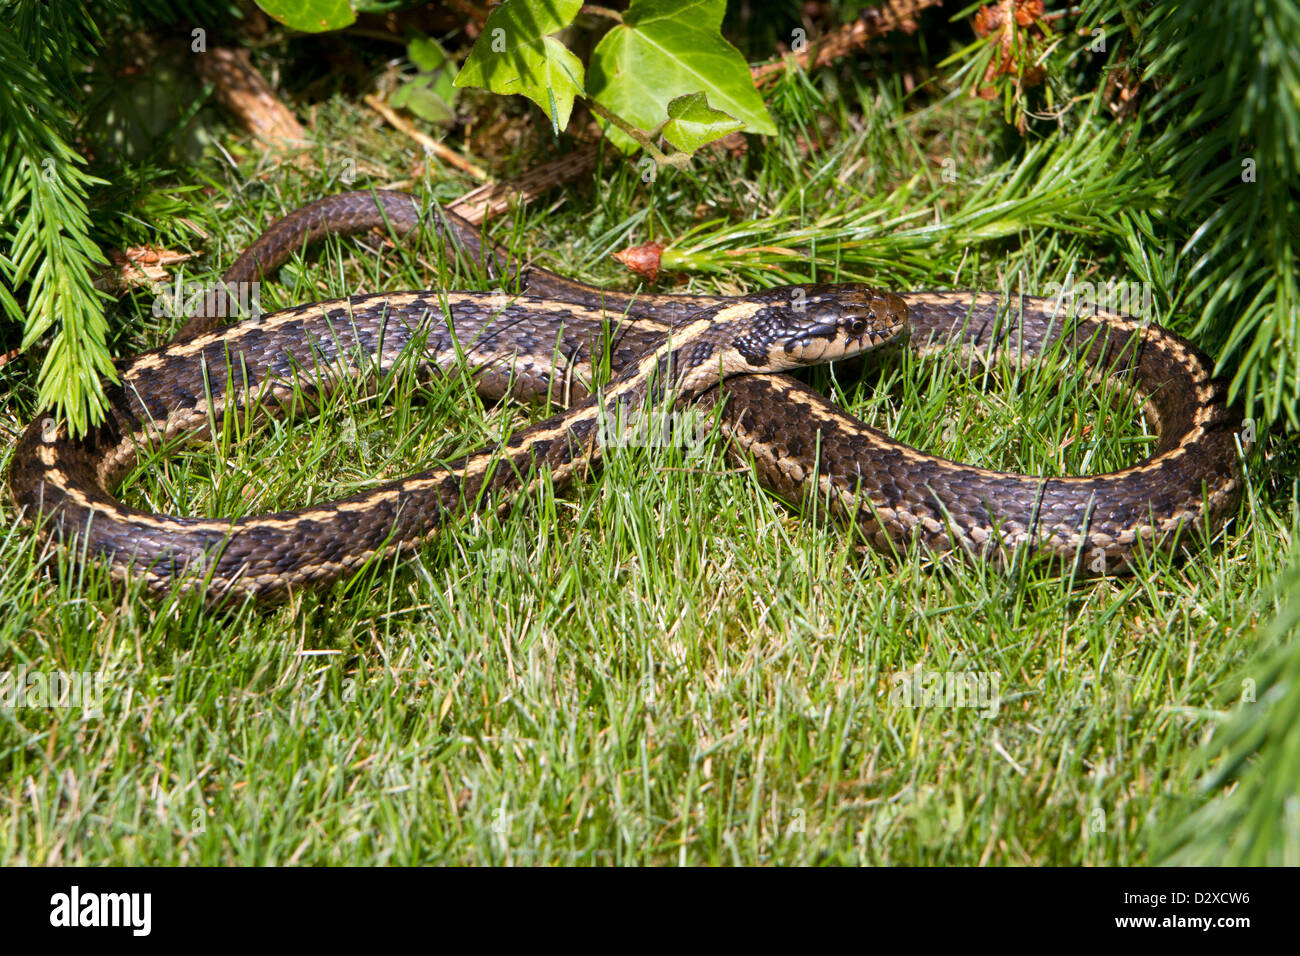 Common Garter Snake Thamnophis Sirtalis In Grass In Garden In